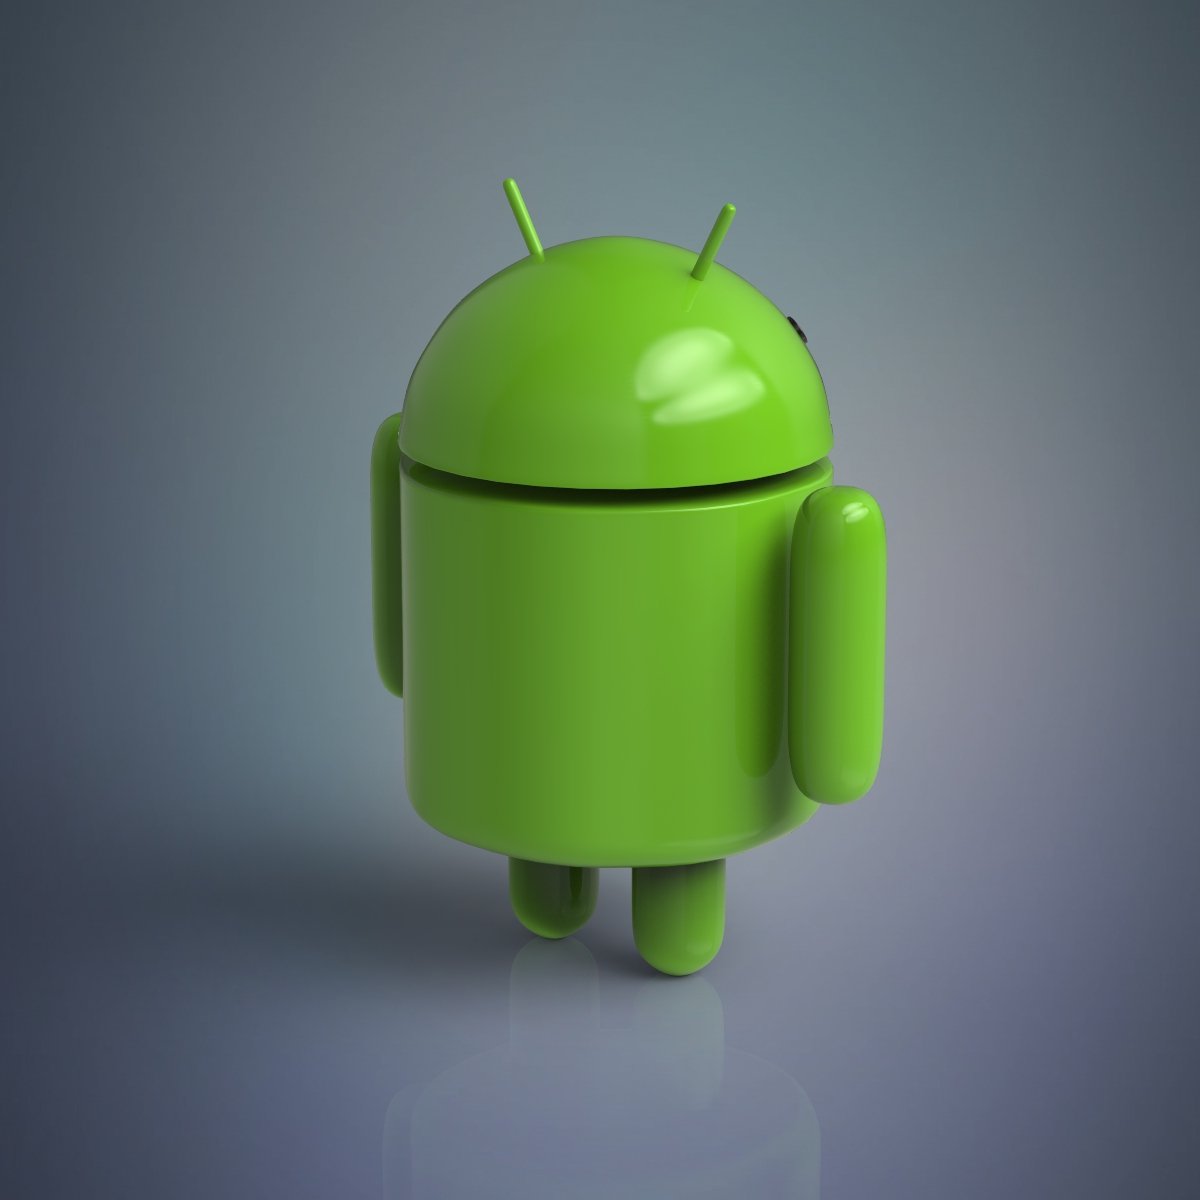 Toy android. Игрушка андроид 3д модель. Модель андроид. Включи игрушечный андроид. Modal Android.